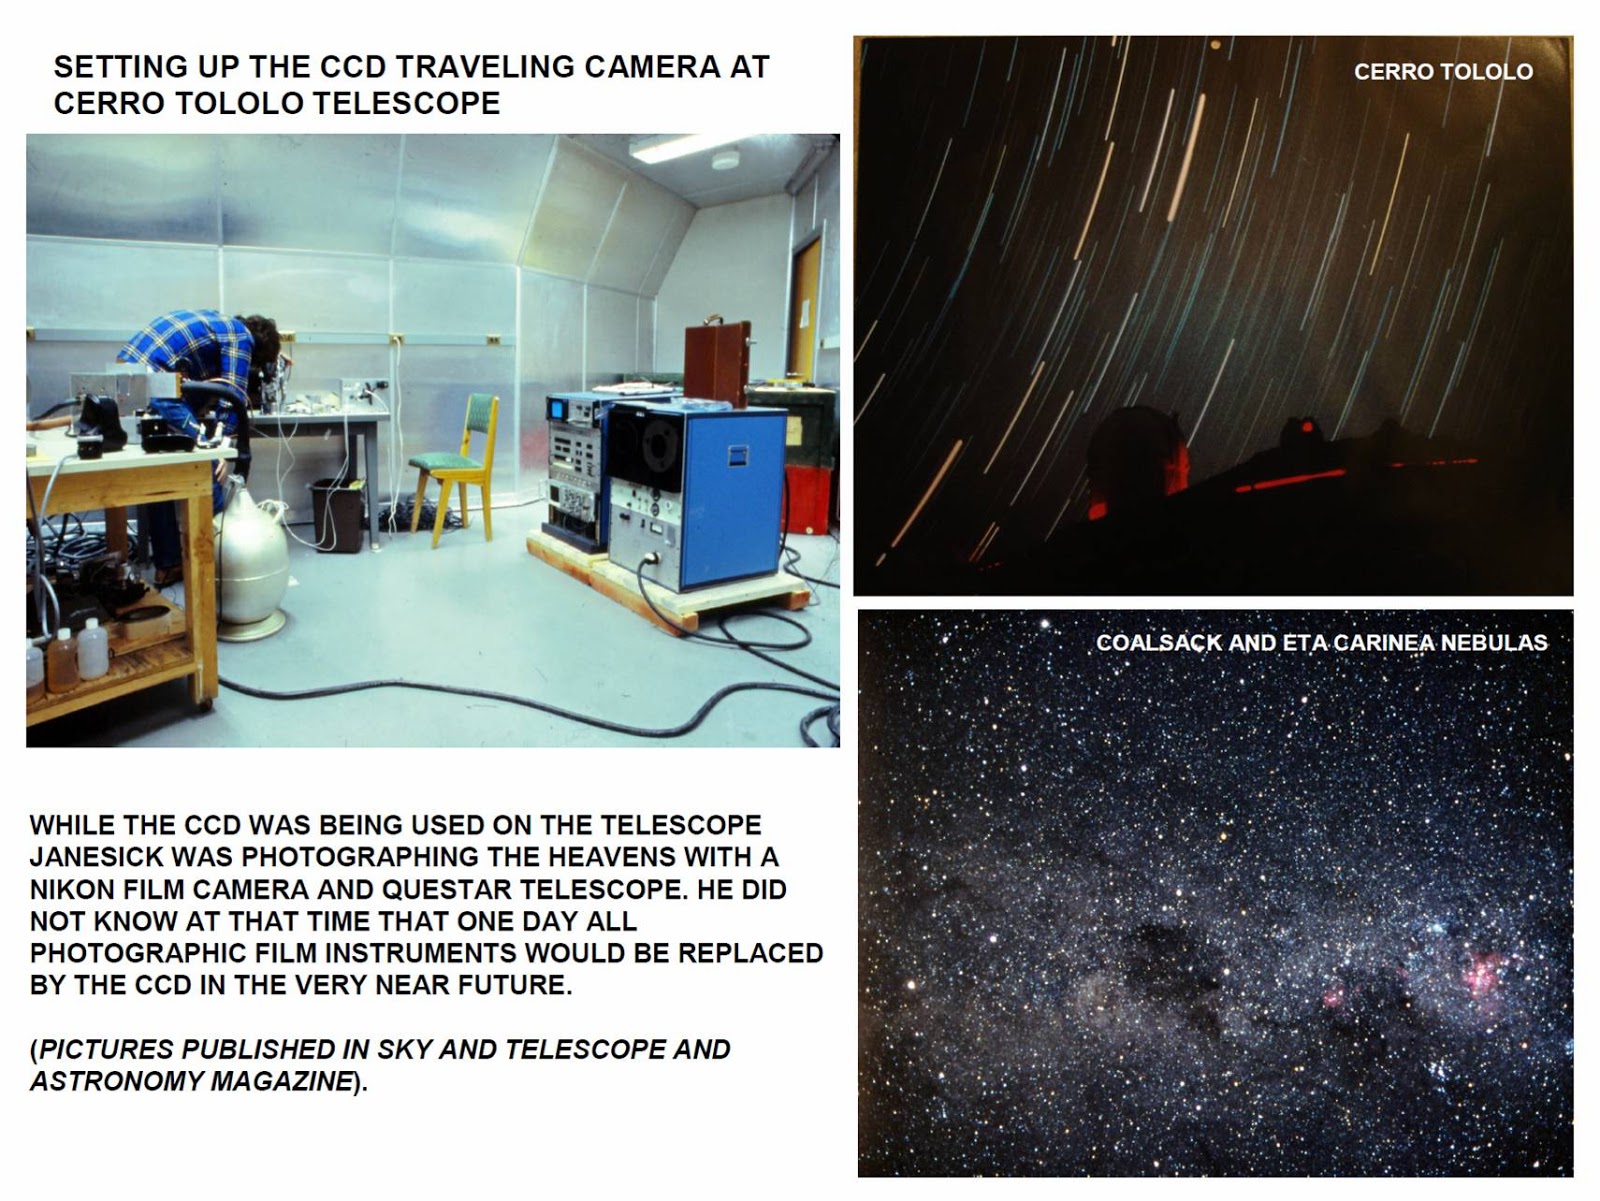 Janesick JKPL traveling CCD  camera at Cerro Tololo Telescope